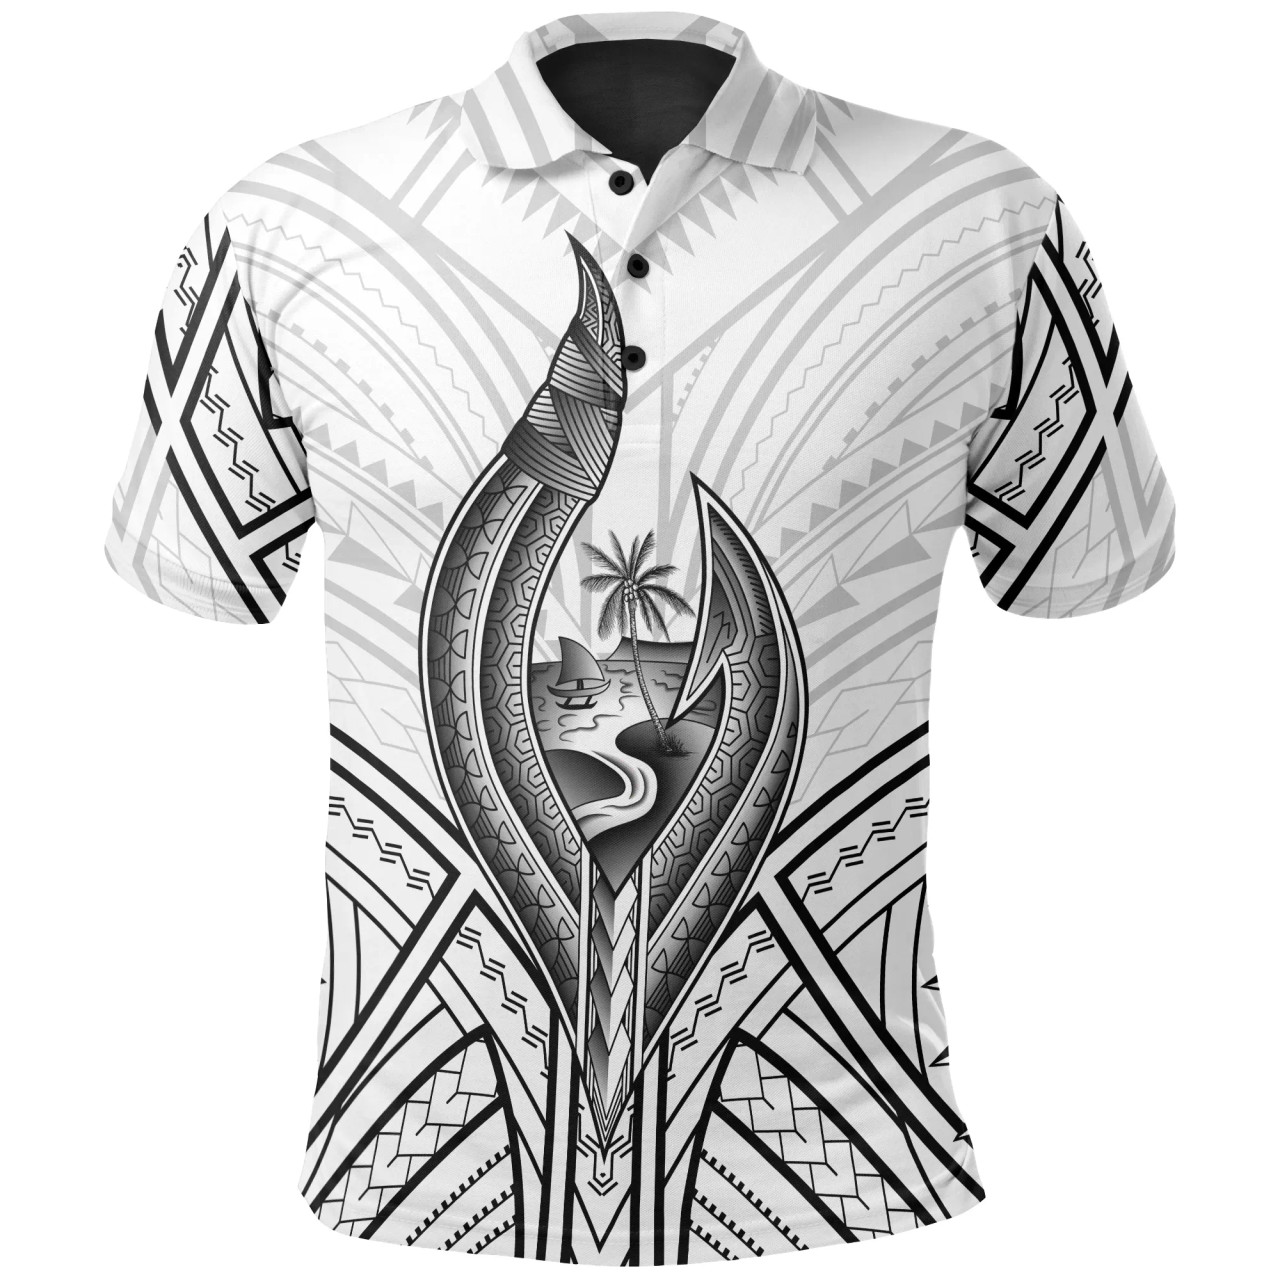 Guam Polo Shirt - Guam Seal Chamorro Tribal 1